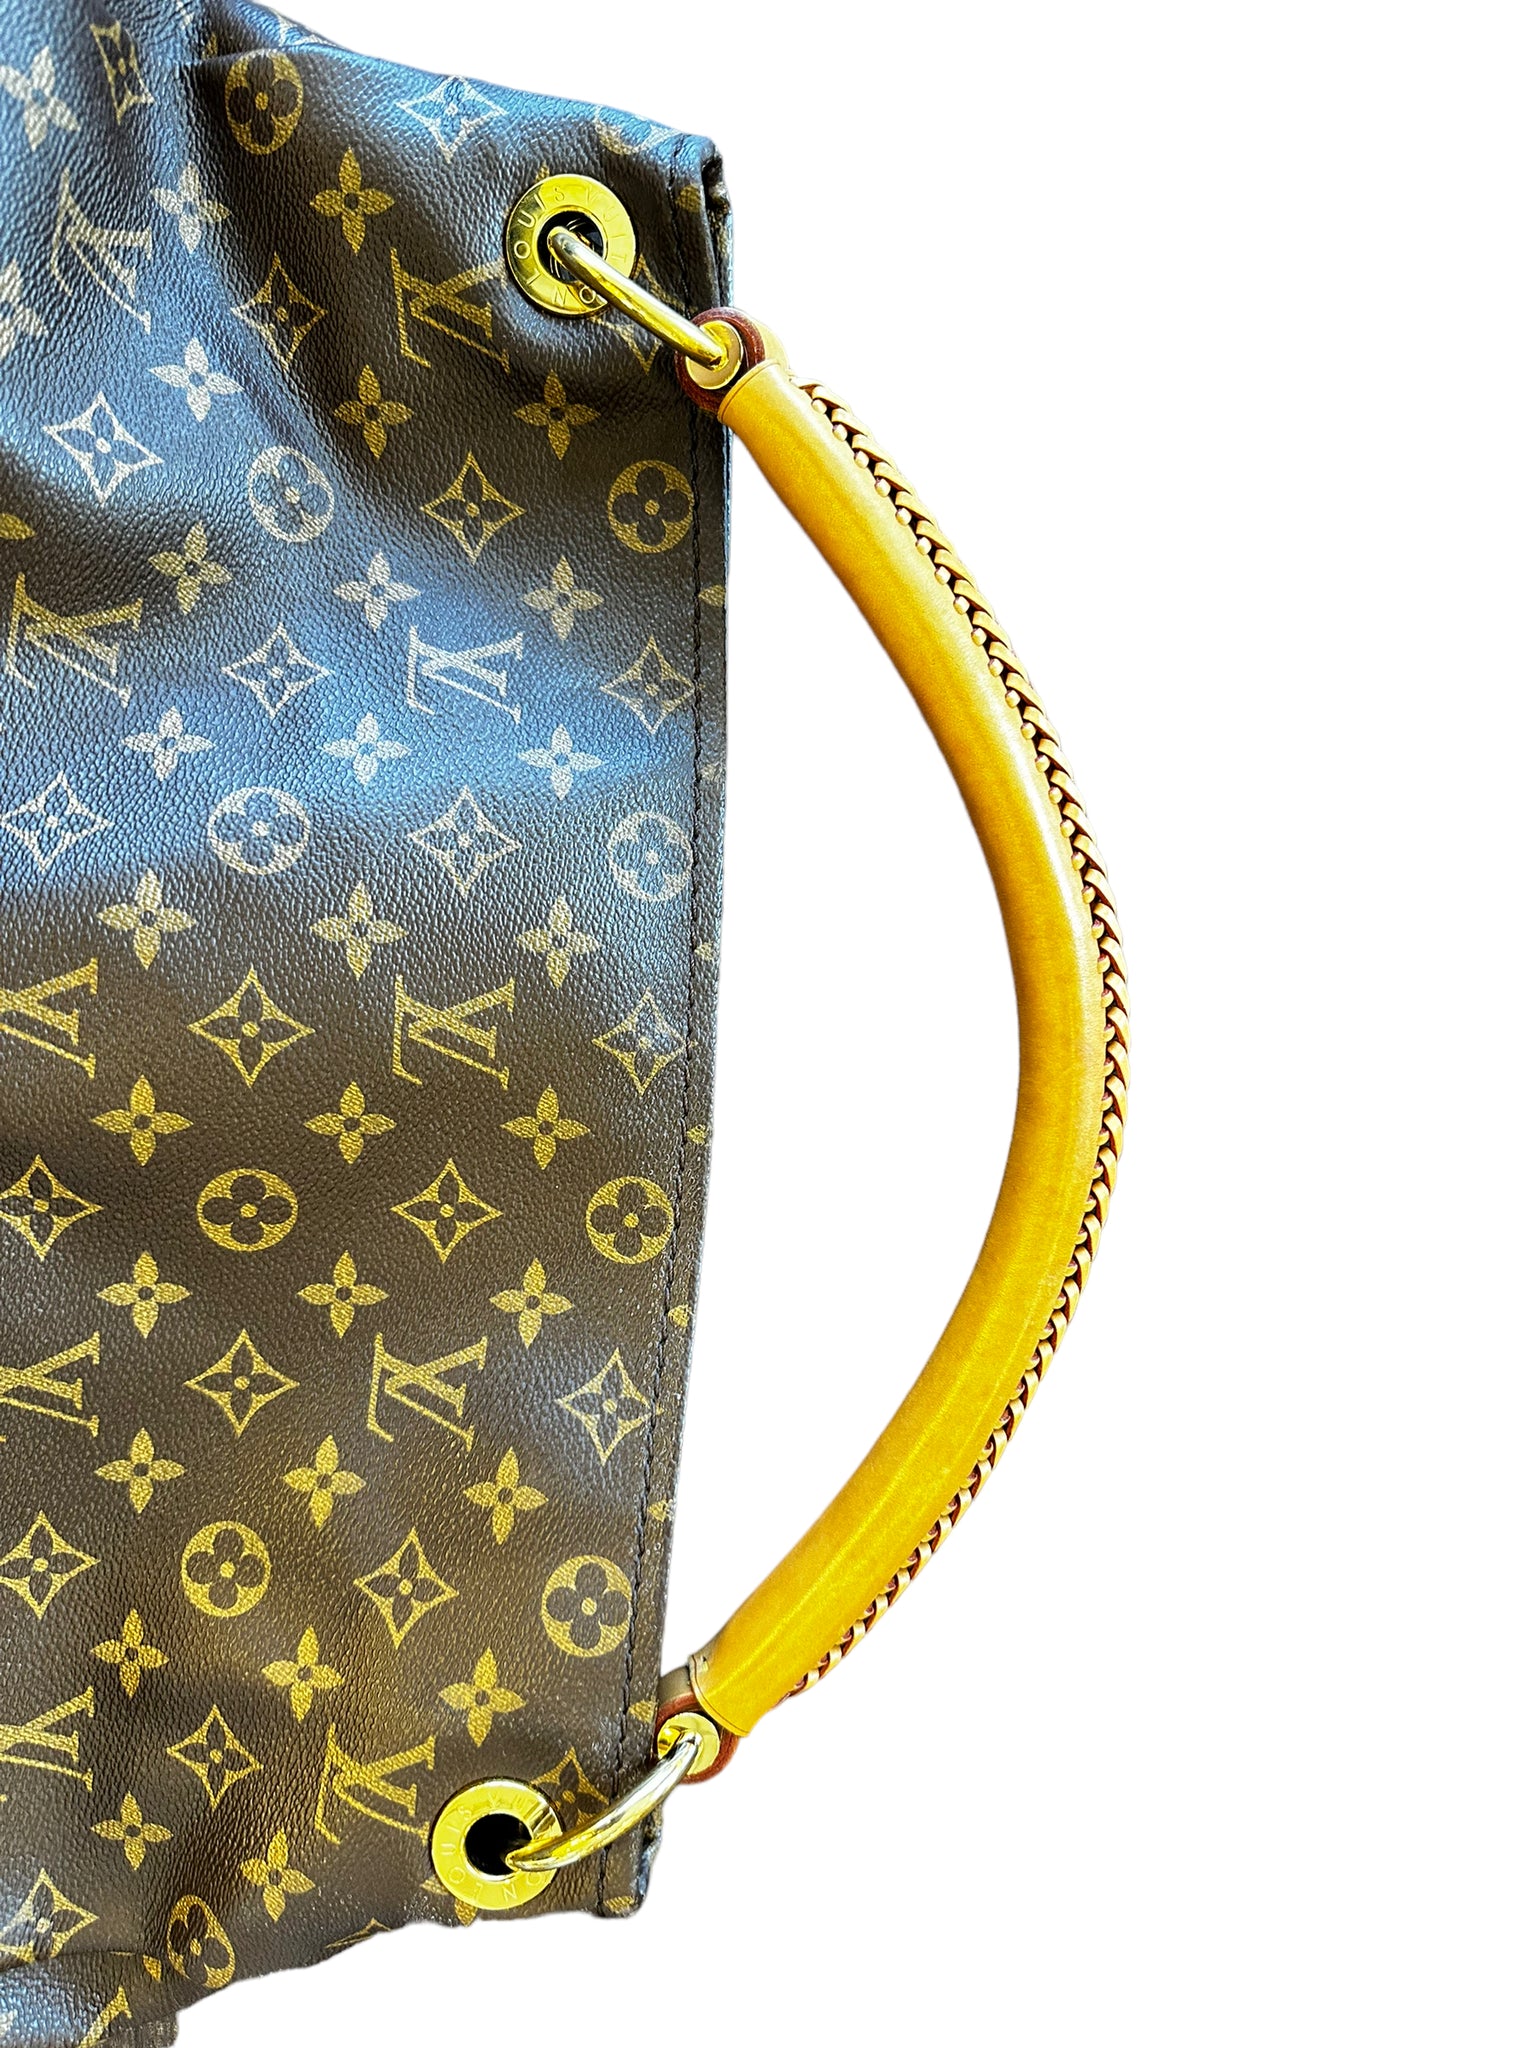 Louis Vuitton Artsy Mm Large Handbag Braided Handle